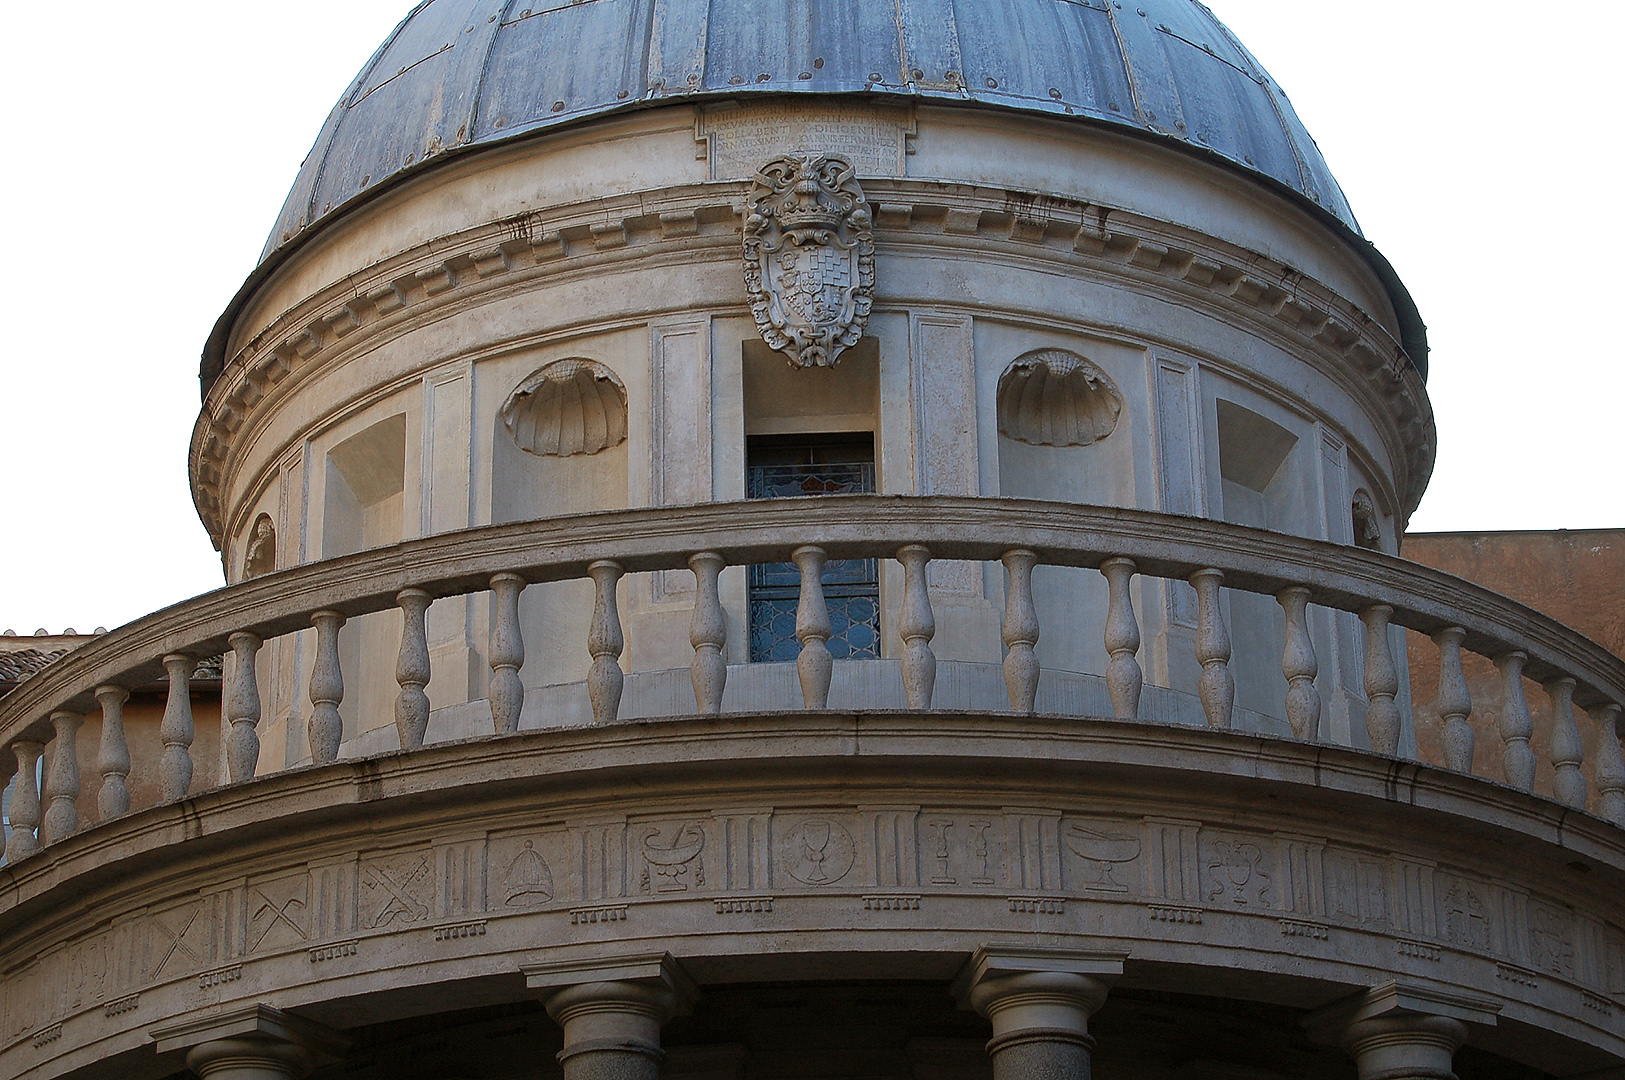 Tempeltje van Bramante, Tempietto (San Pietro in Montorio, Rome, Italy)